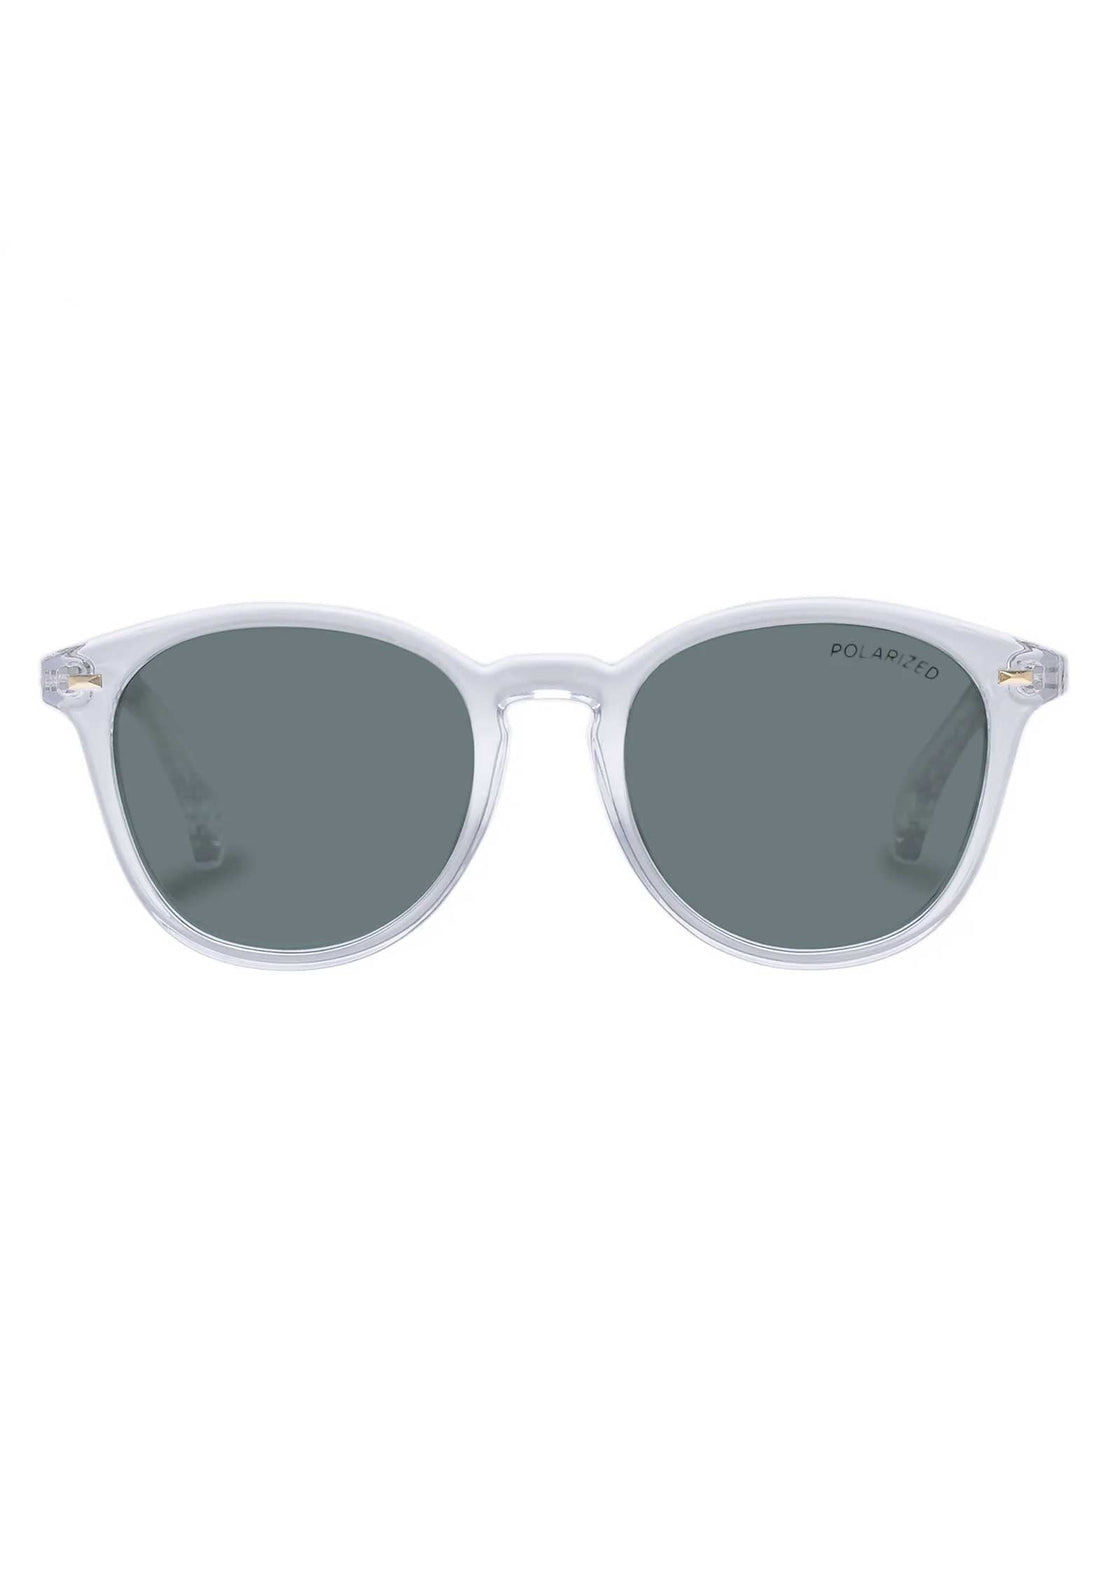 Sunglasses Bandwagon 210234 Crystal-Clear